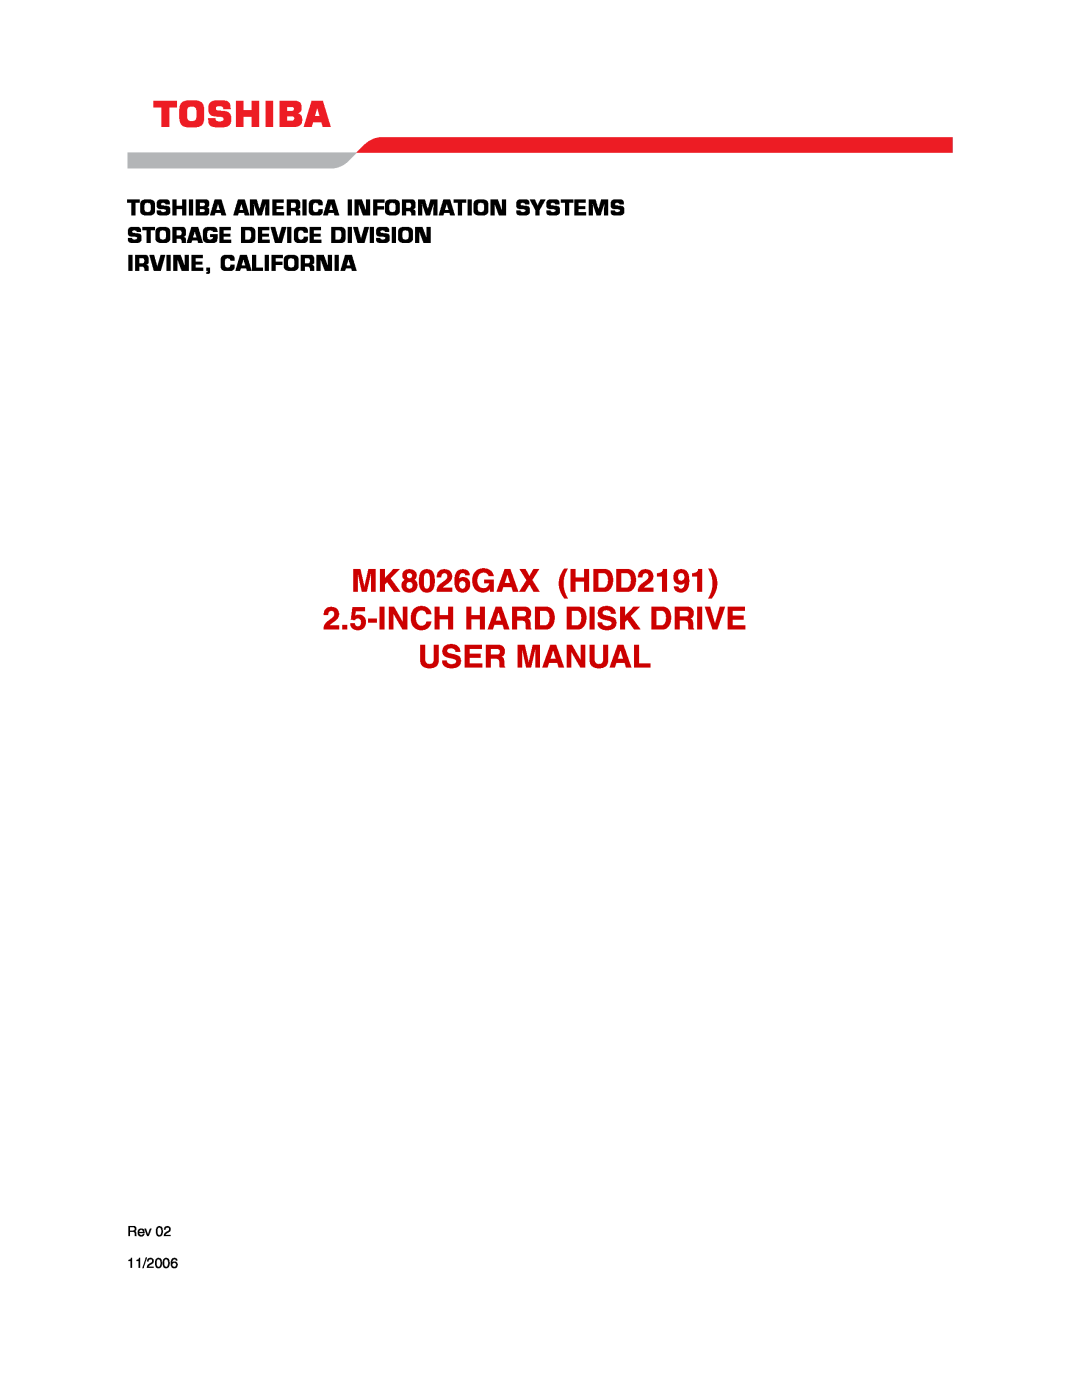 Toshiba user manual MK8026GAX HDD2191 2.5-INCH HARD DISK DRIVE USER MANUAL, Irvine, California, Rev 11/2006 